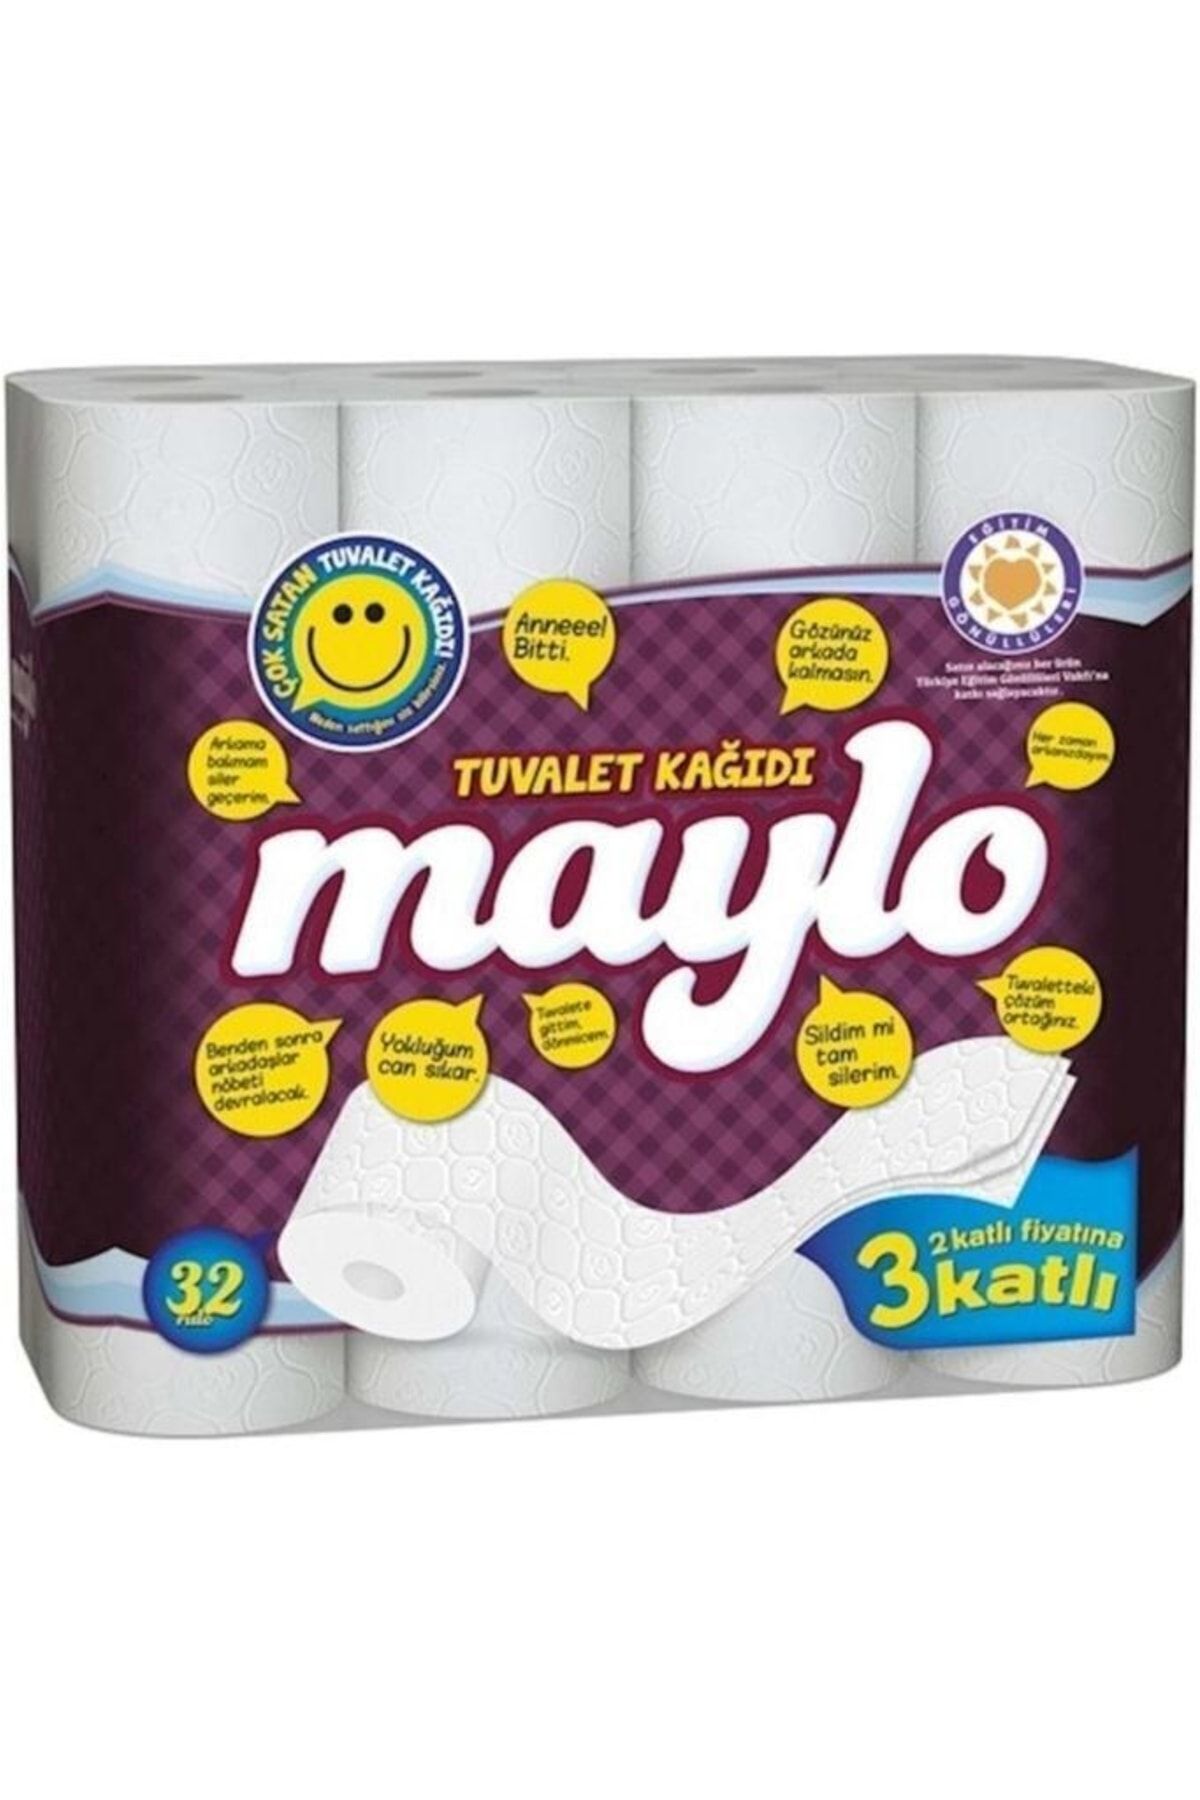 Maylo J-42-56 500817 Tuvalet Kağıdı 3 Katlı 32 'li Paket